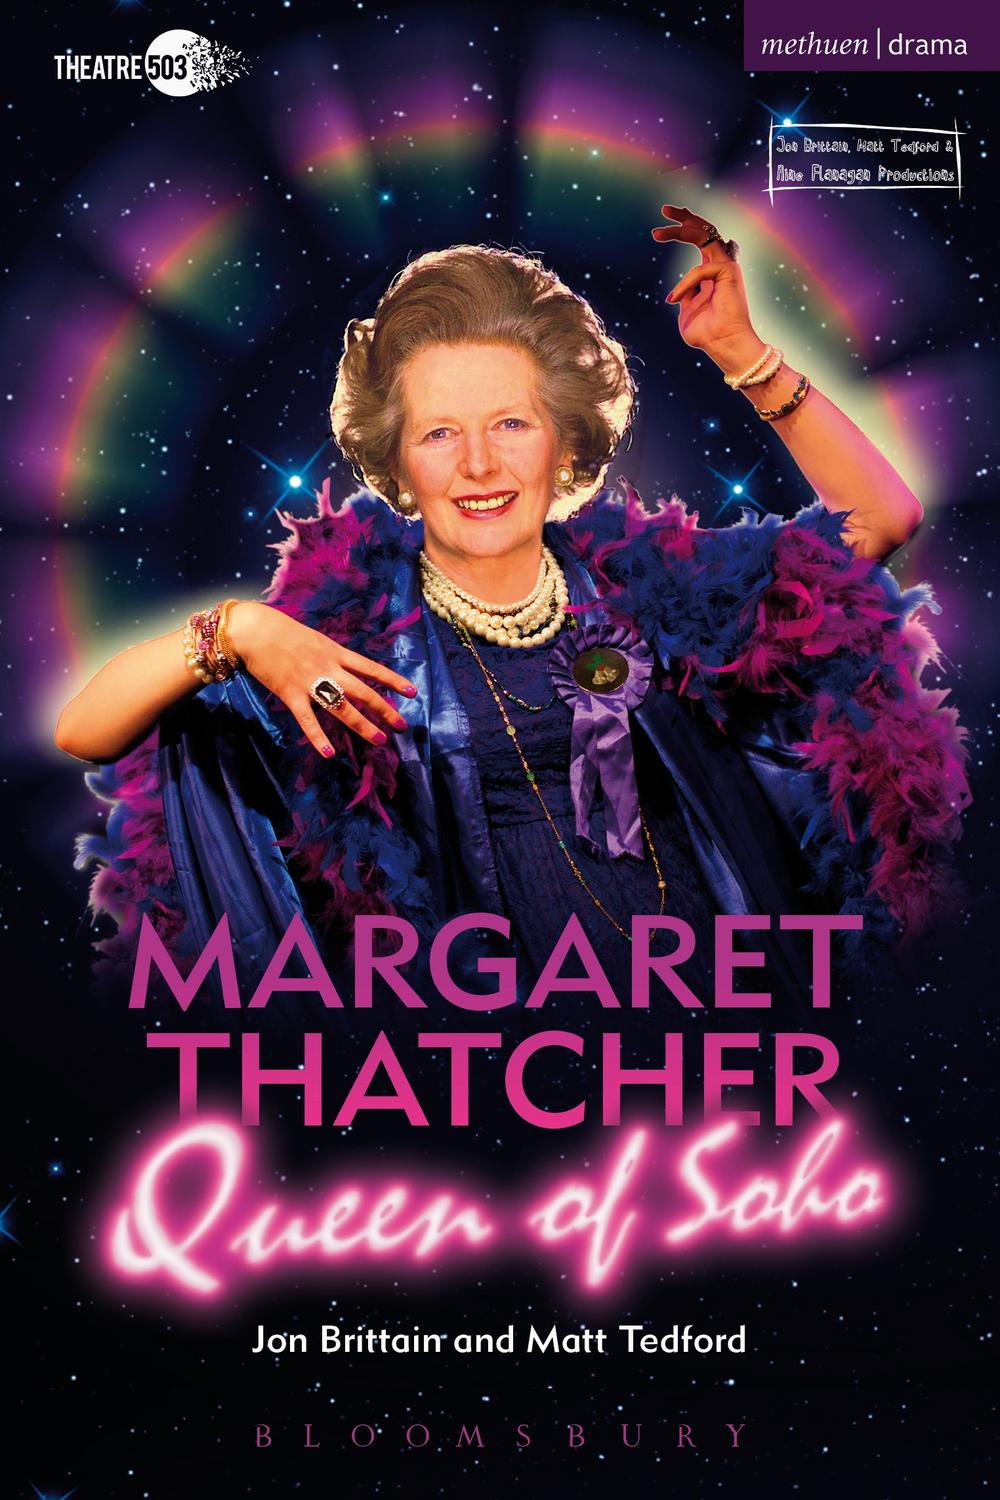 Margaret Thatcher Queen of Soho - Jon Brittain, Matt Tedford